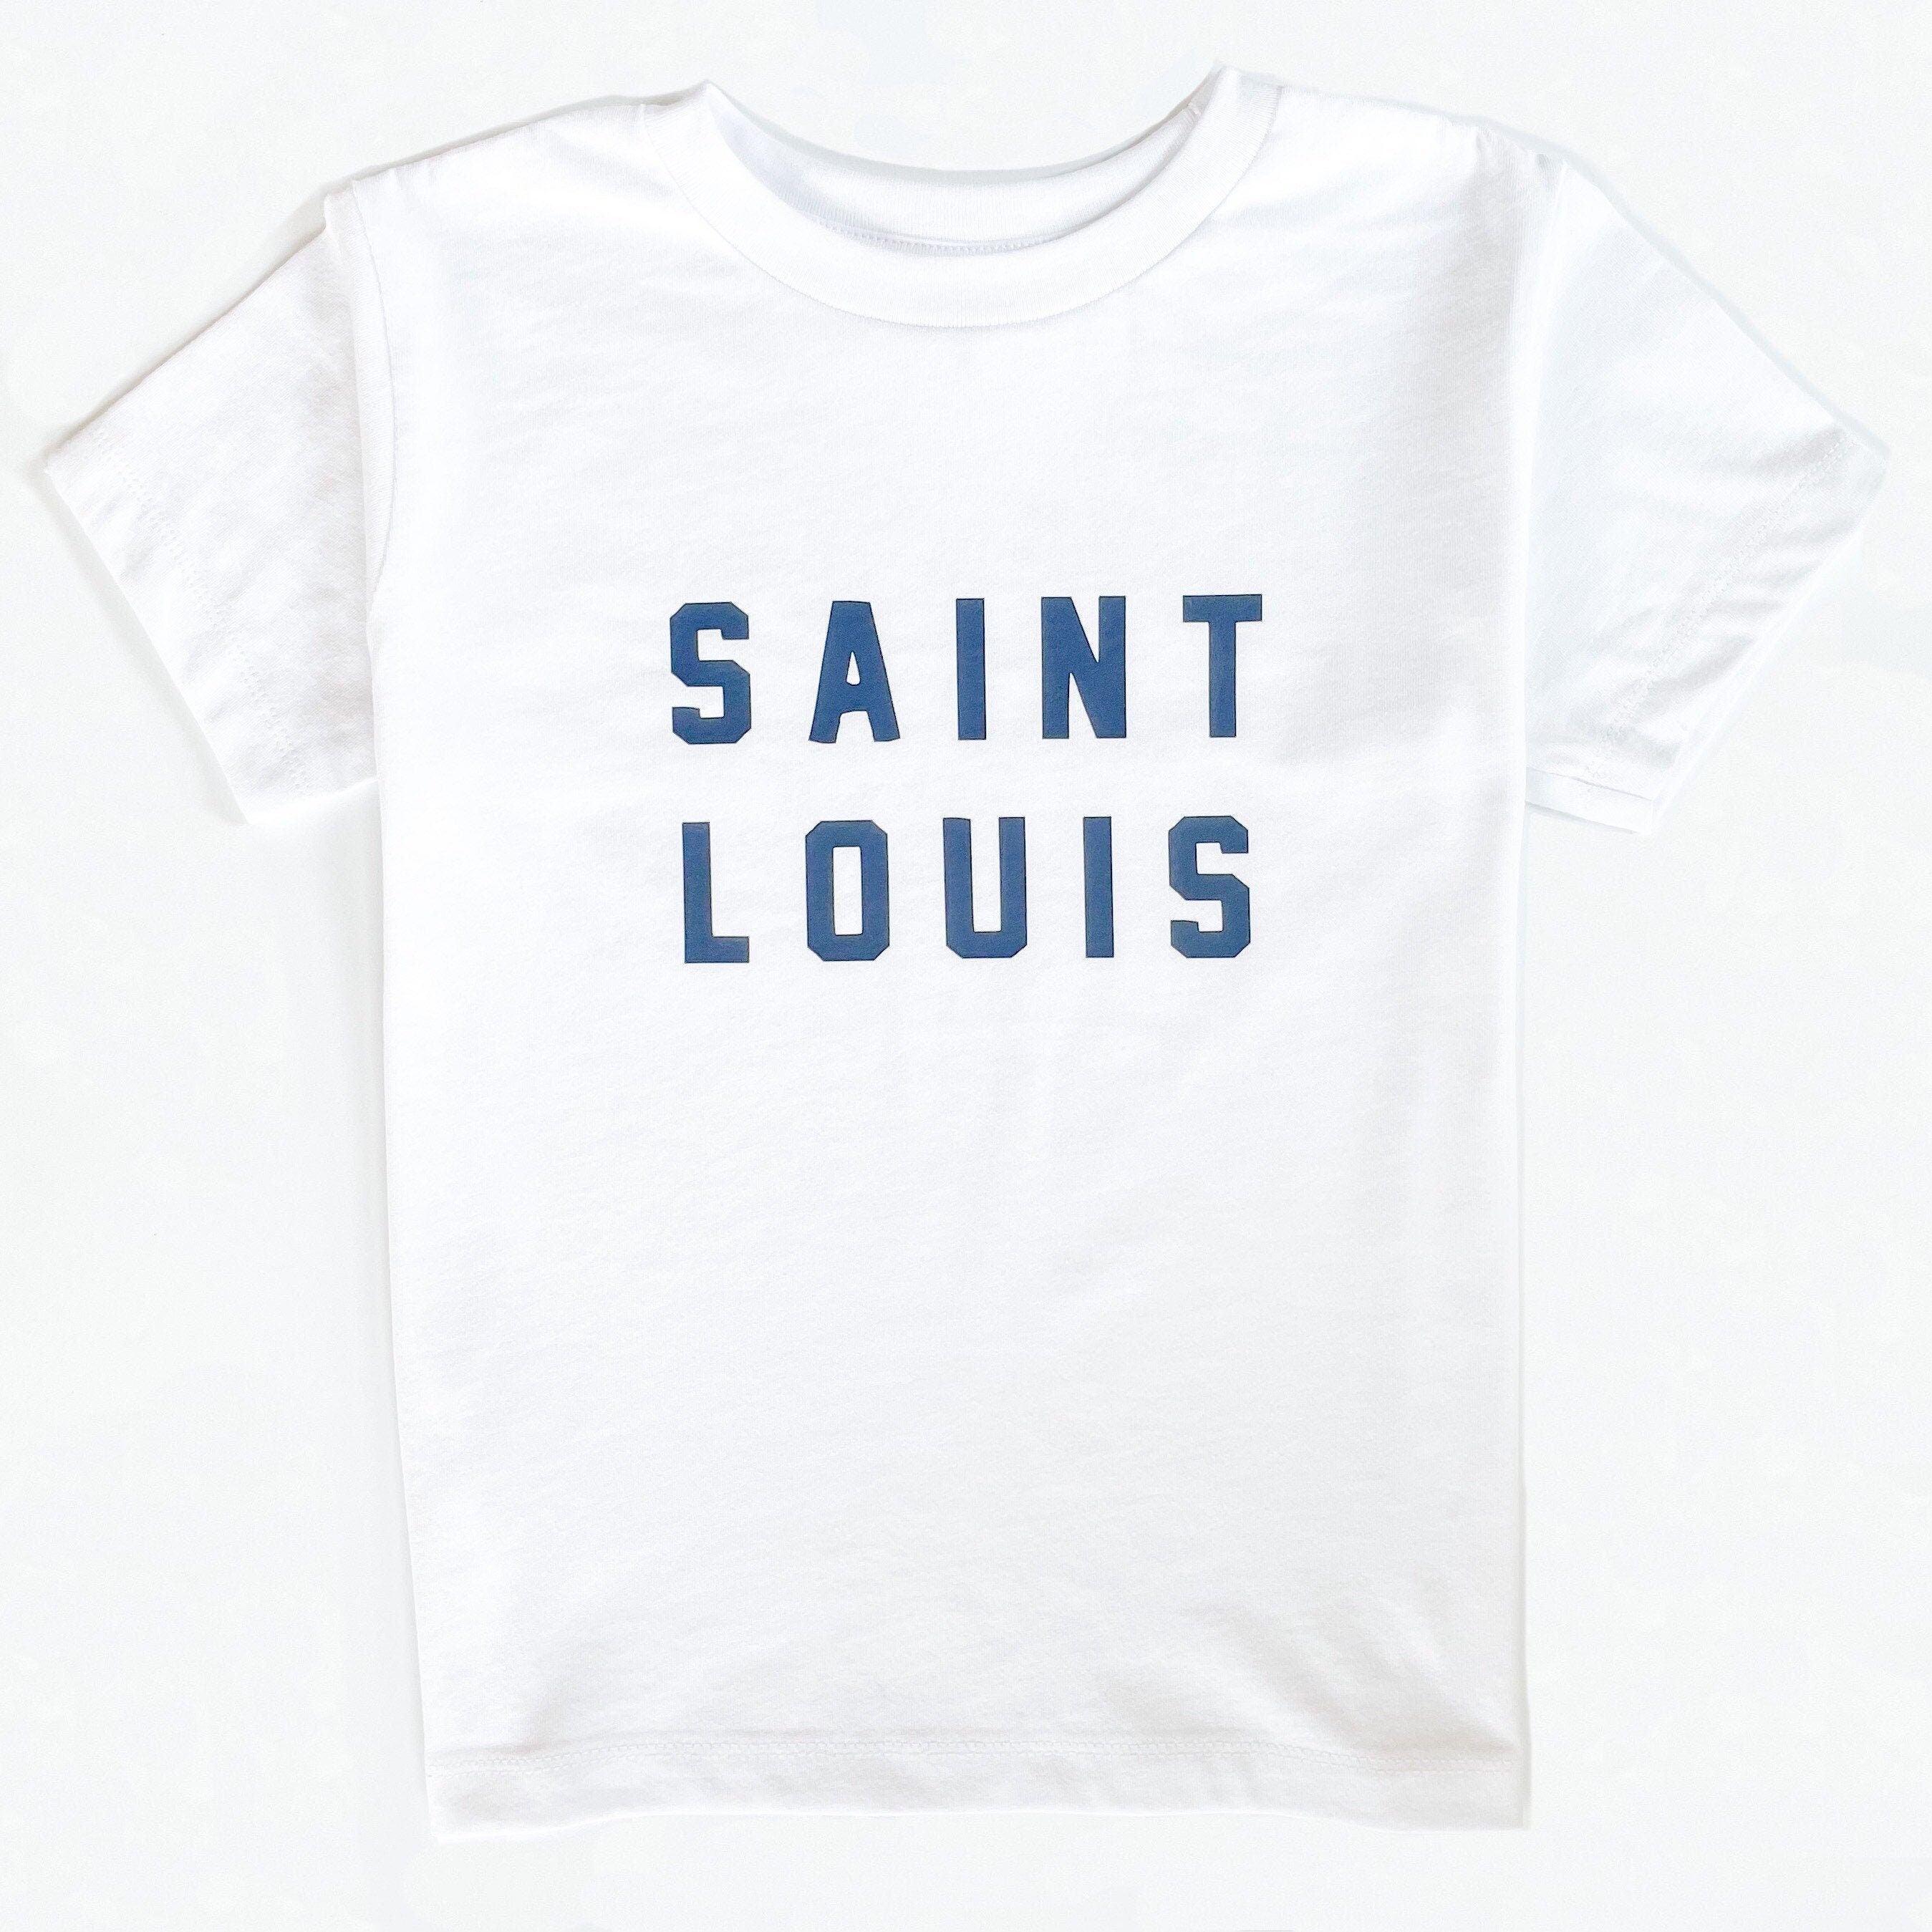 Louis Vuitton Printed Cotton T-Shirt Milk White. Size M0